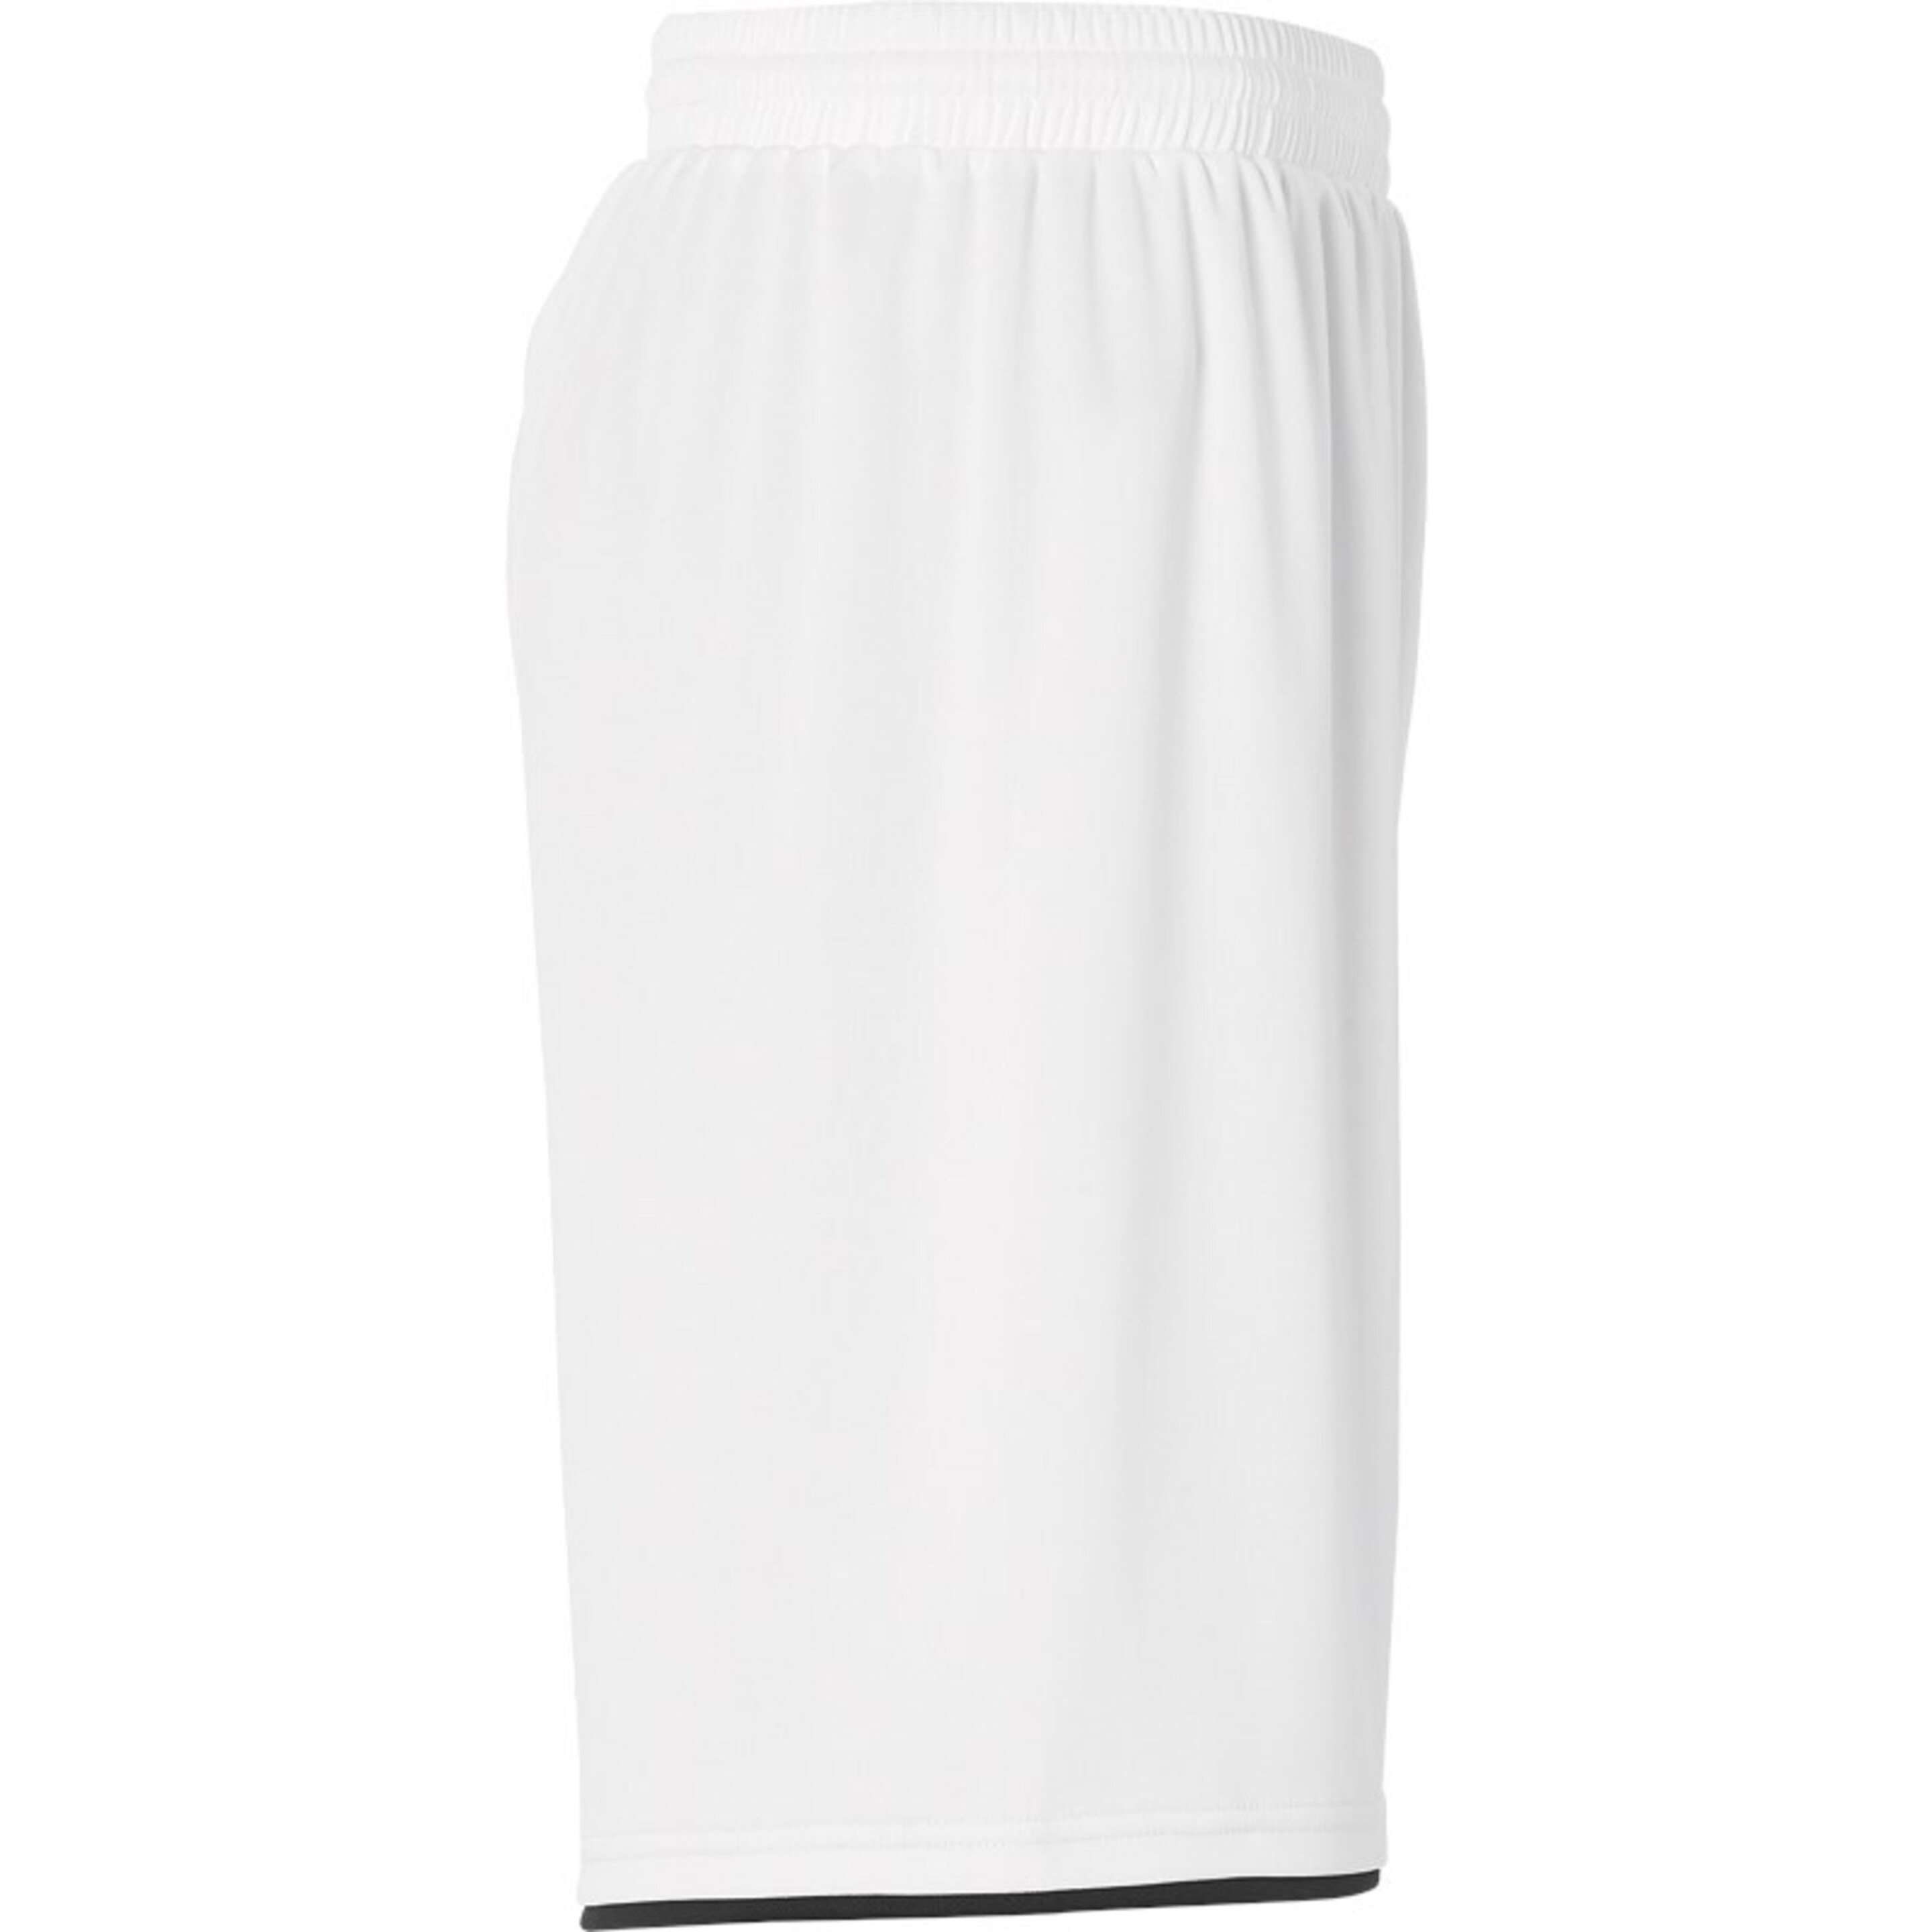 Club Shorts Blanco/negro Uhlsport